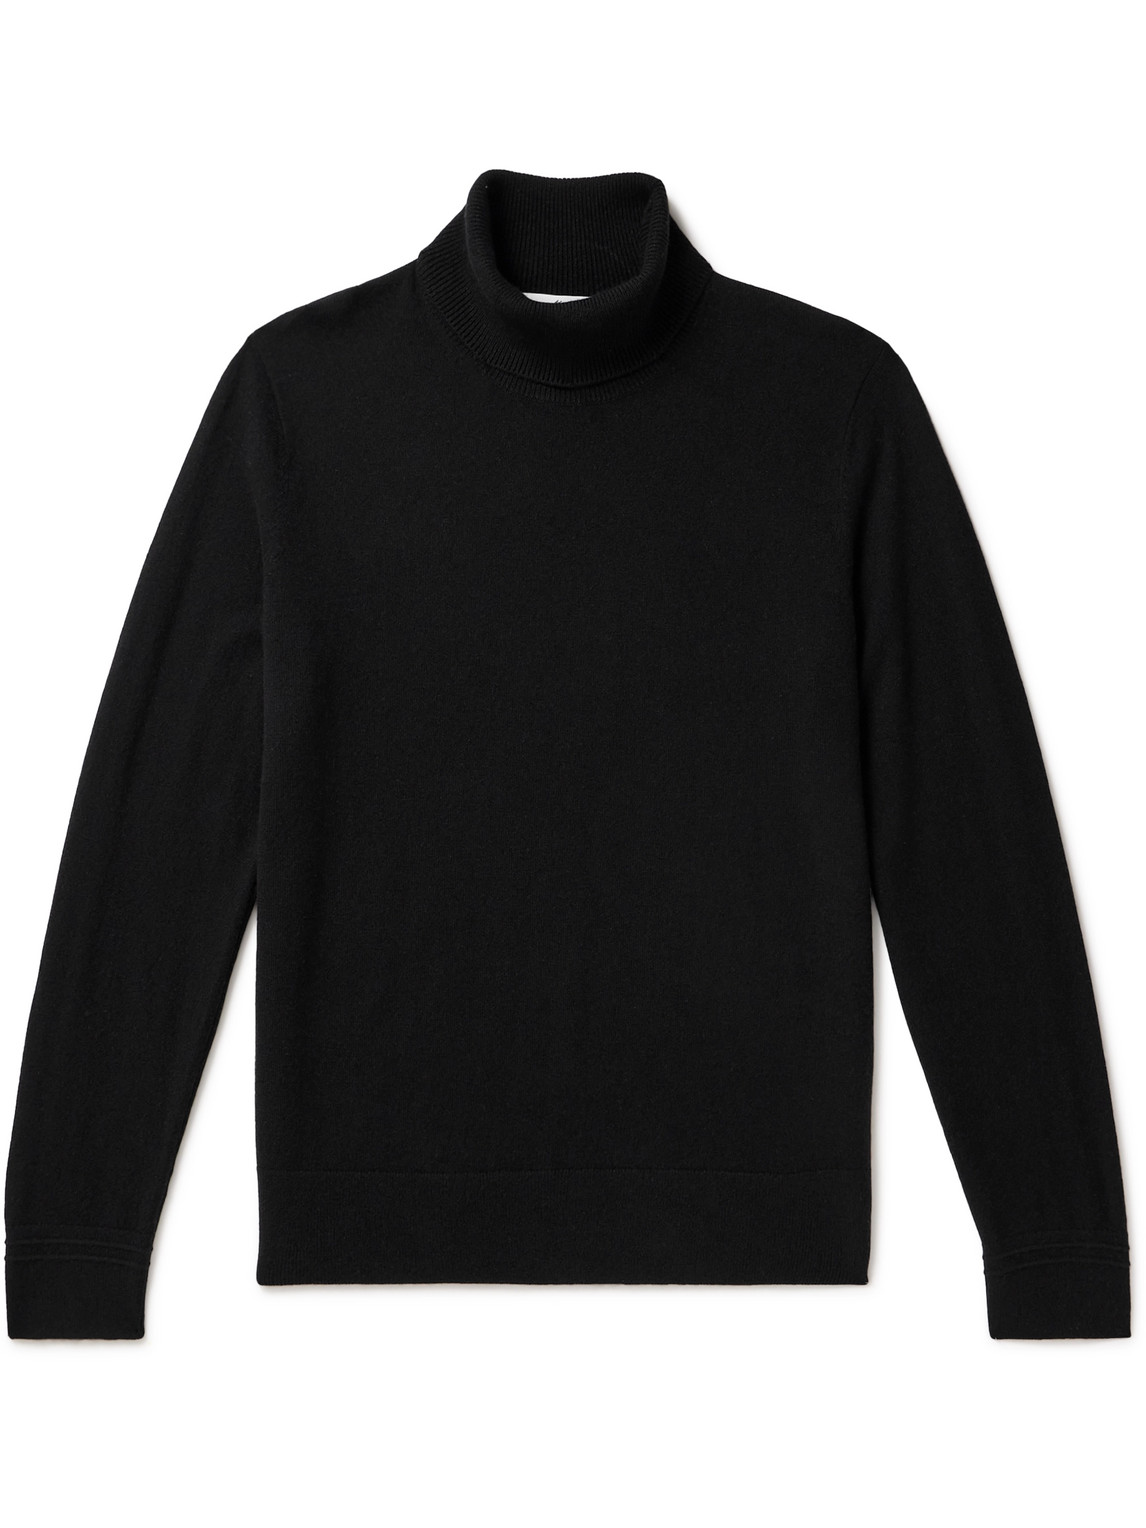 Mr P. - Cashmere Rollneck Sweater - Men - Black - L von Mr P.